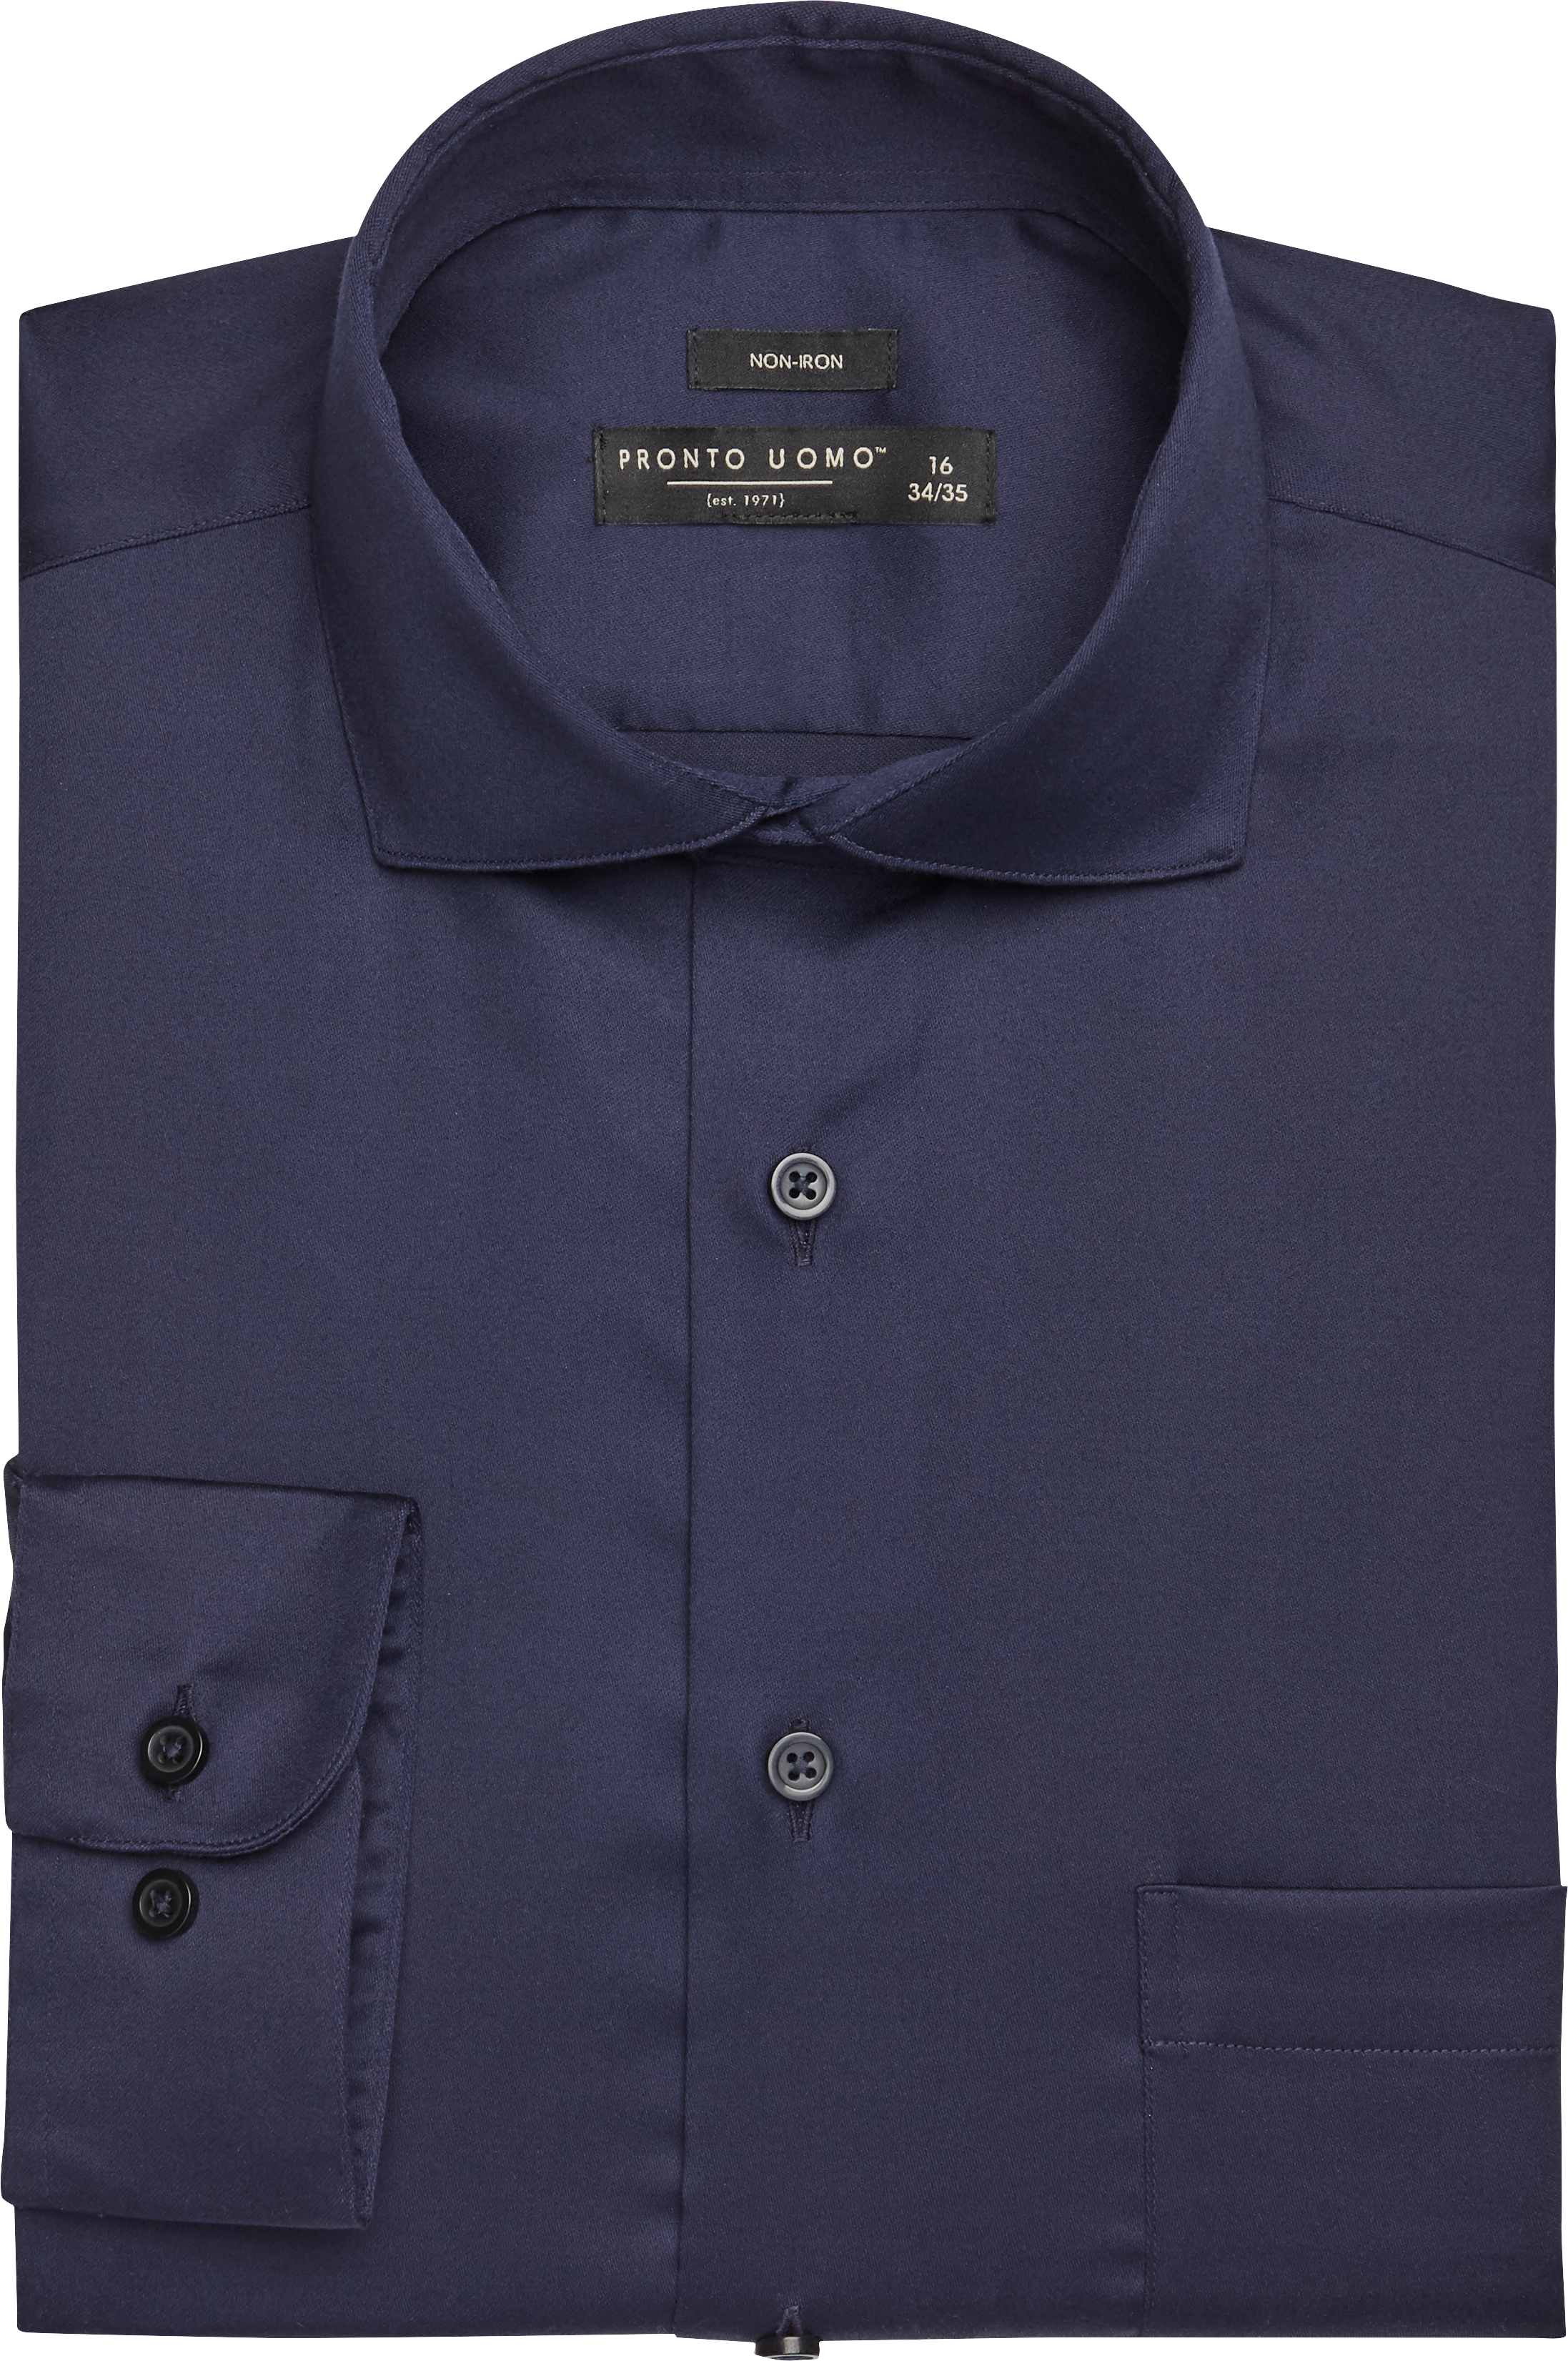 Pronto Uomo Navy Dress Shirt - Men's Sale | Men's Wearhouse